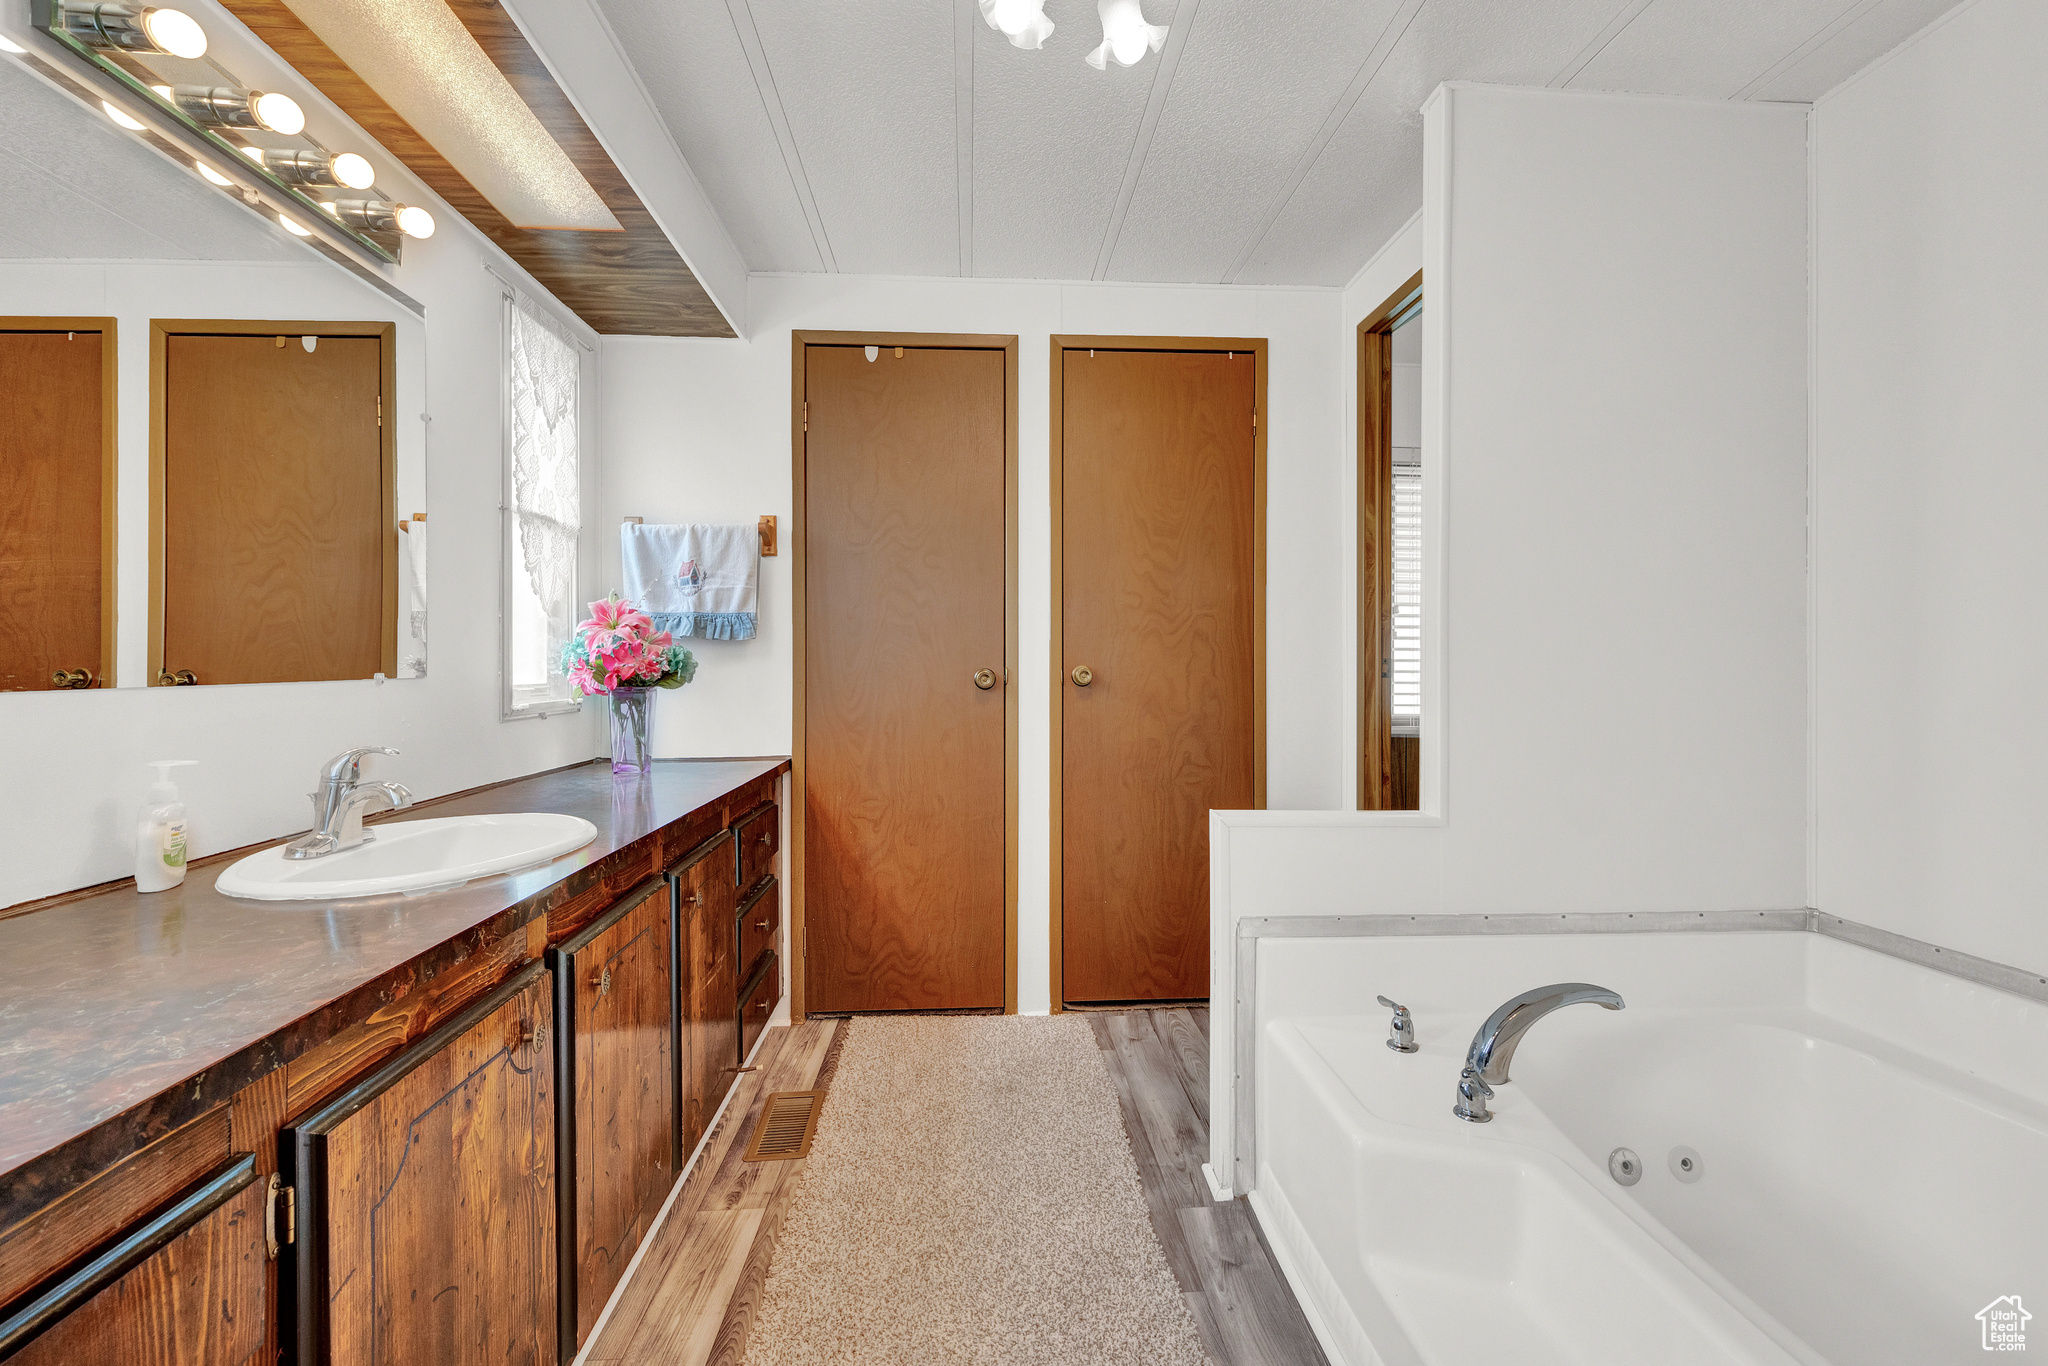 Bathroom with hardwood / wood-style flooring, oversized vanity, and a tub